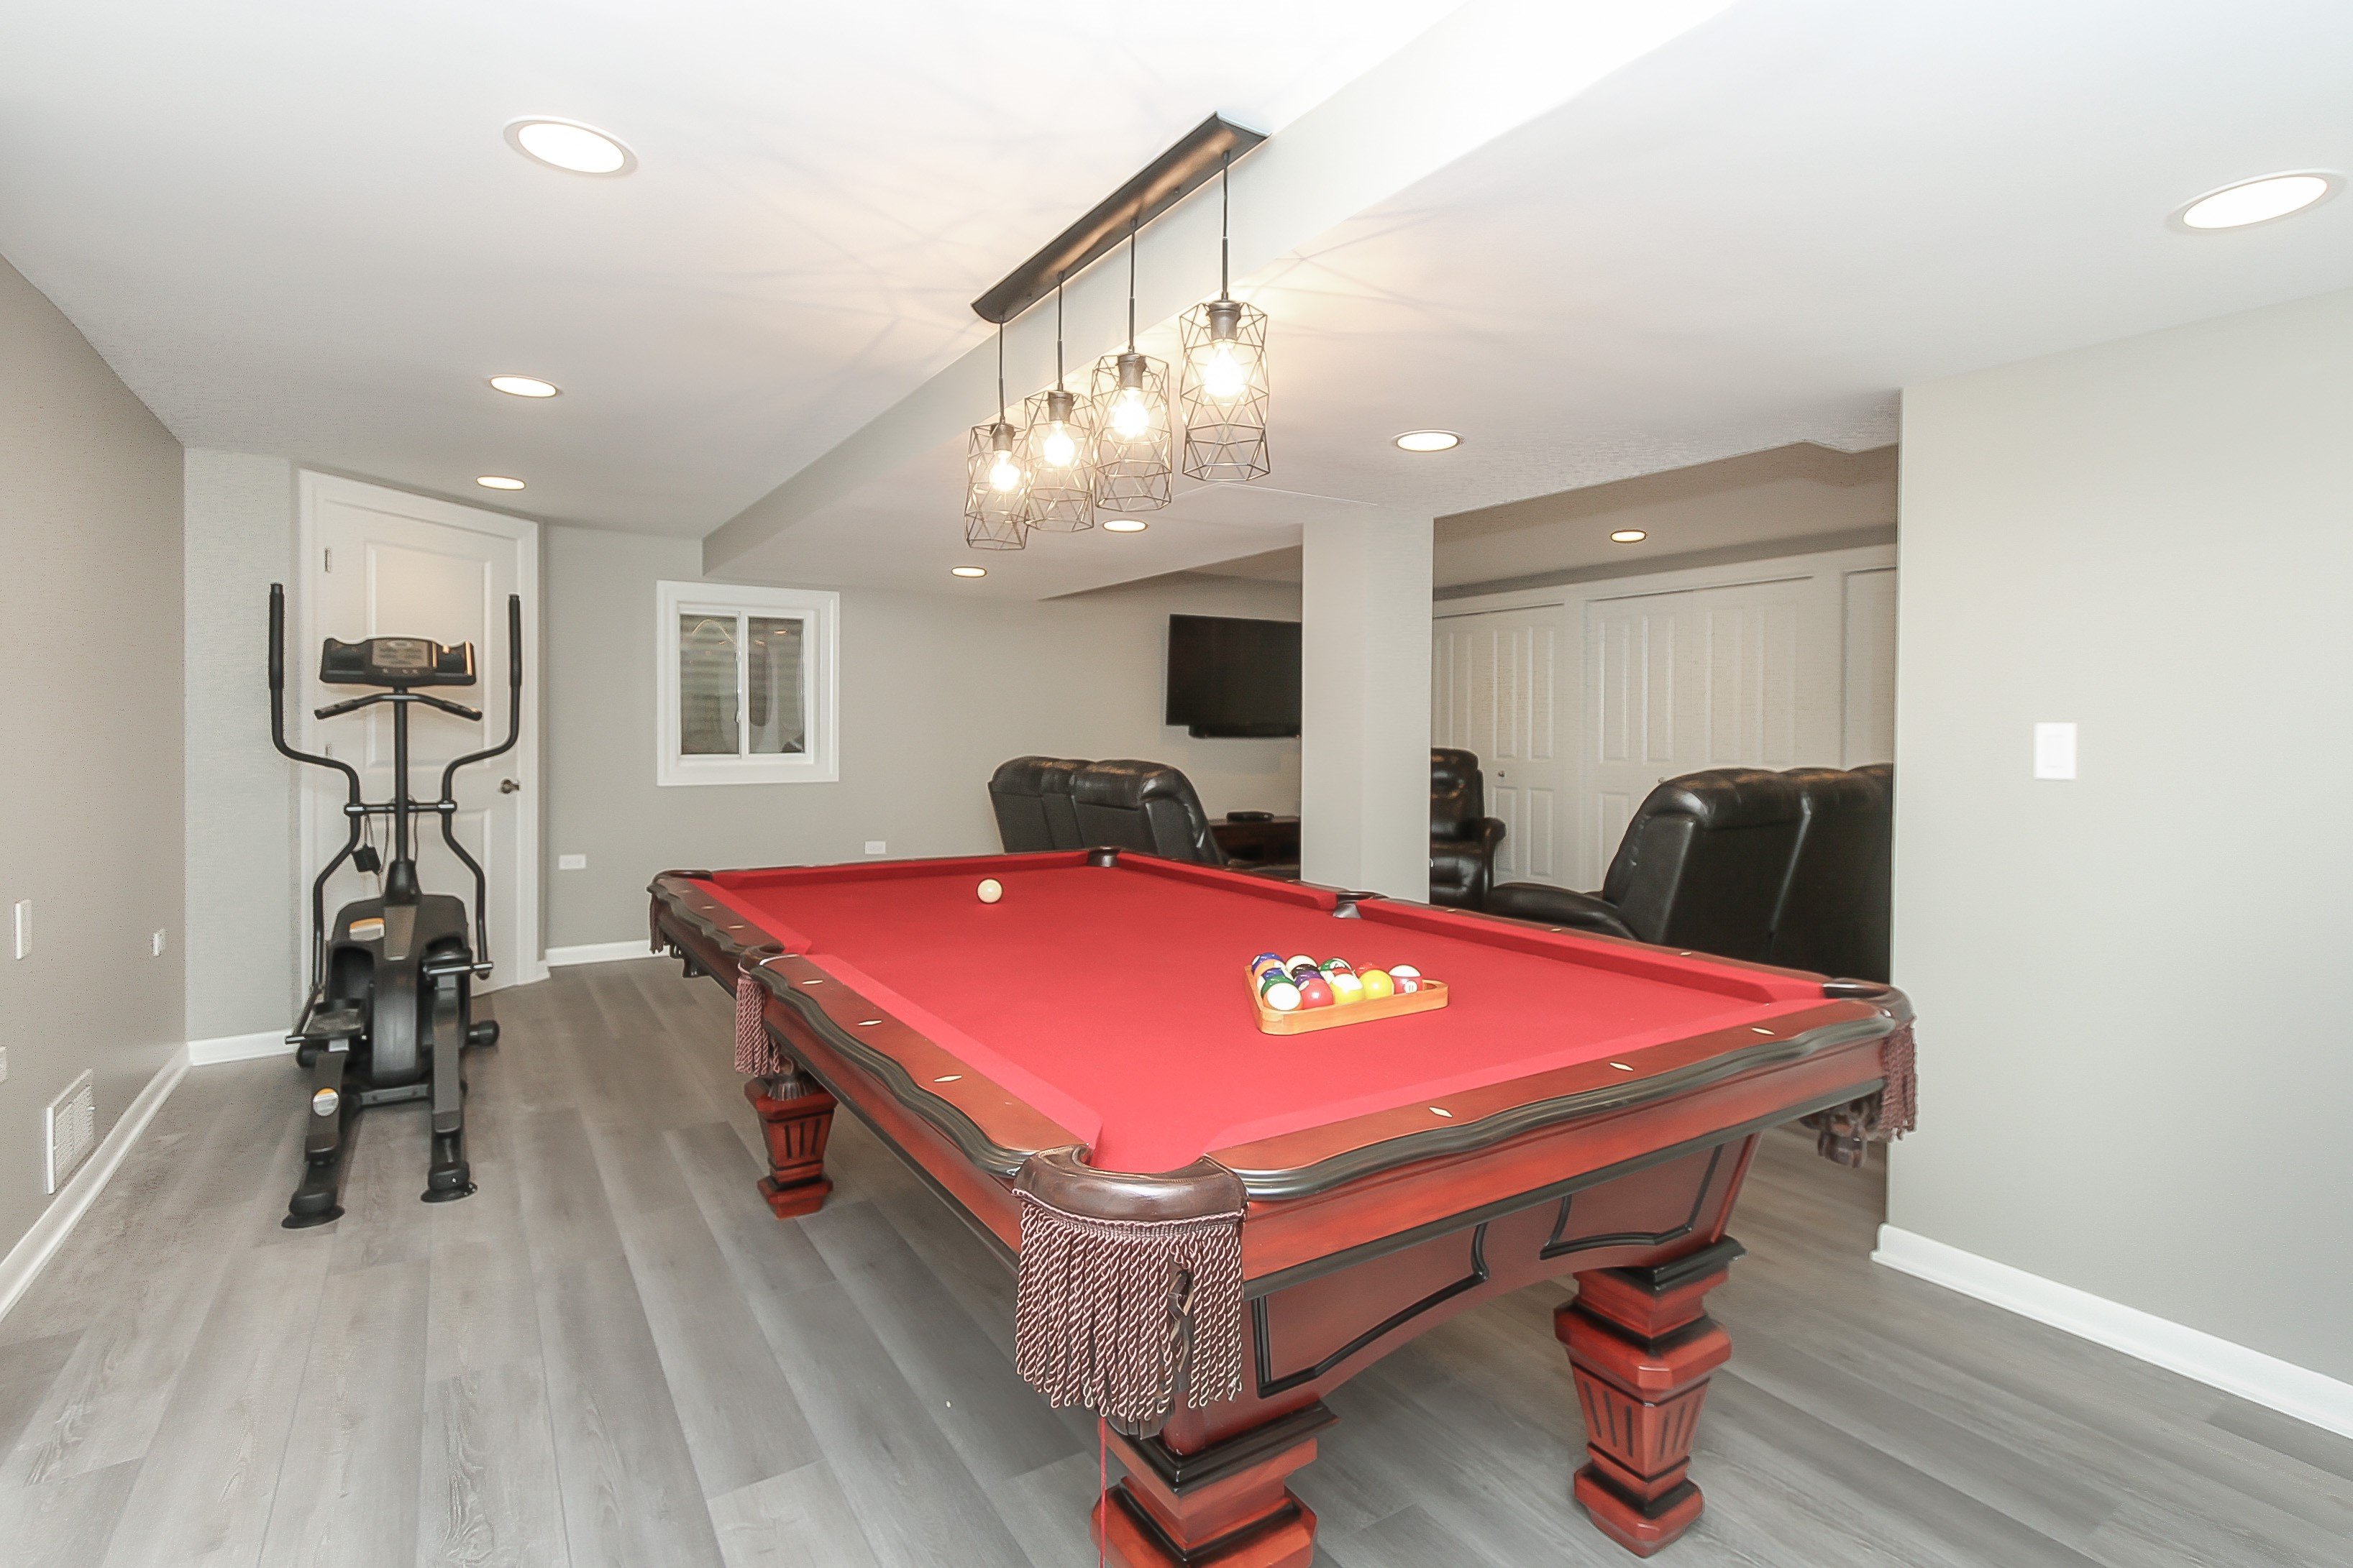 pool table in basement remodel 